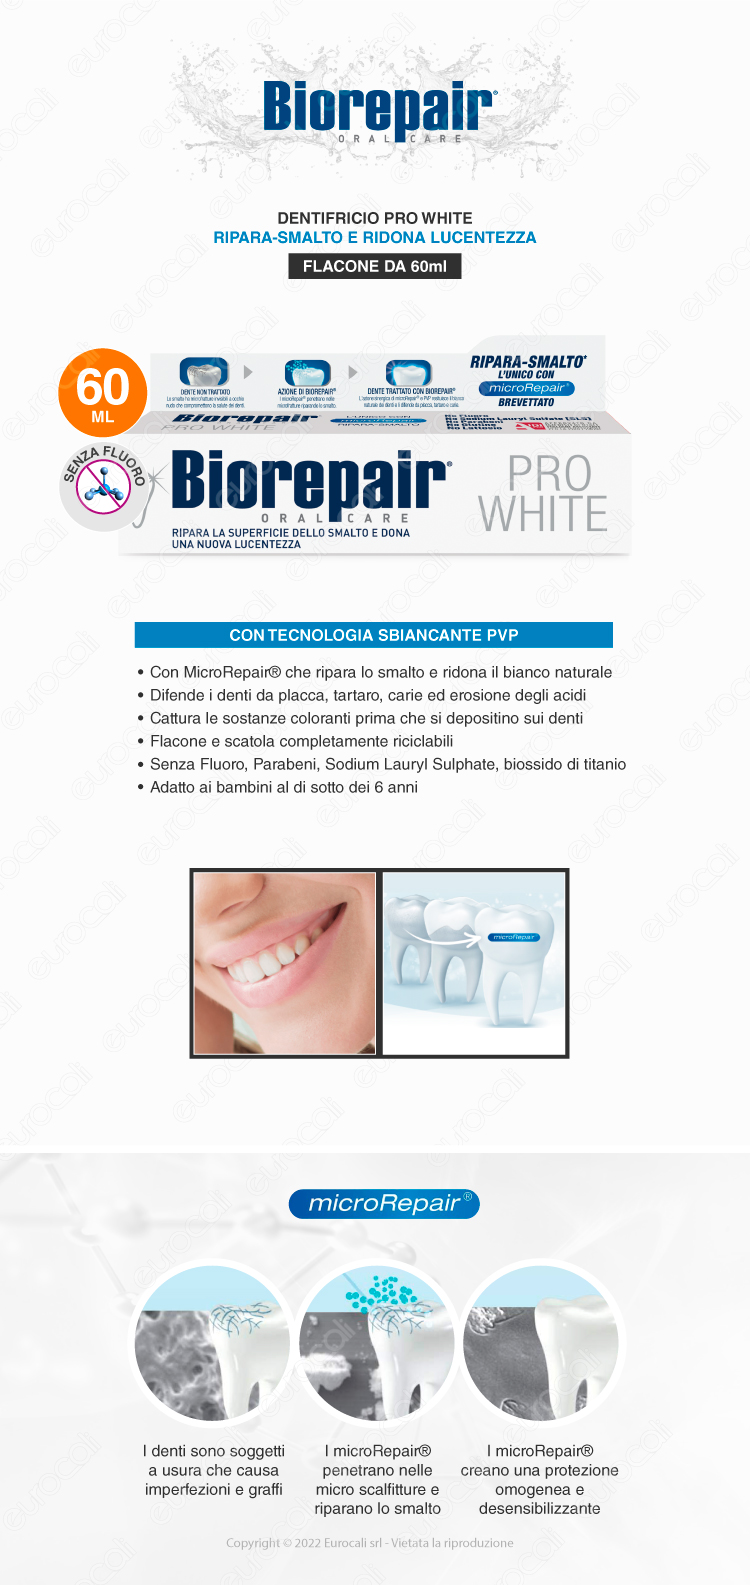 Biorepair dentifricio sbiancante pro white